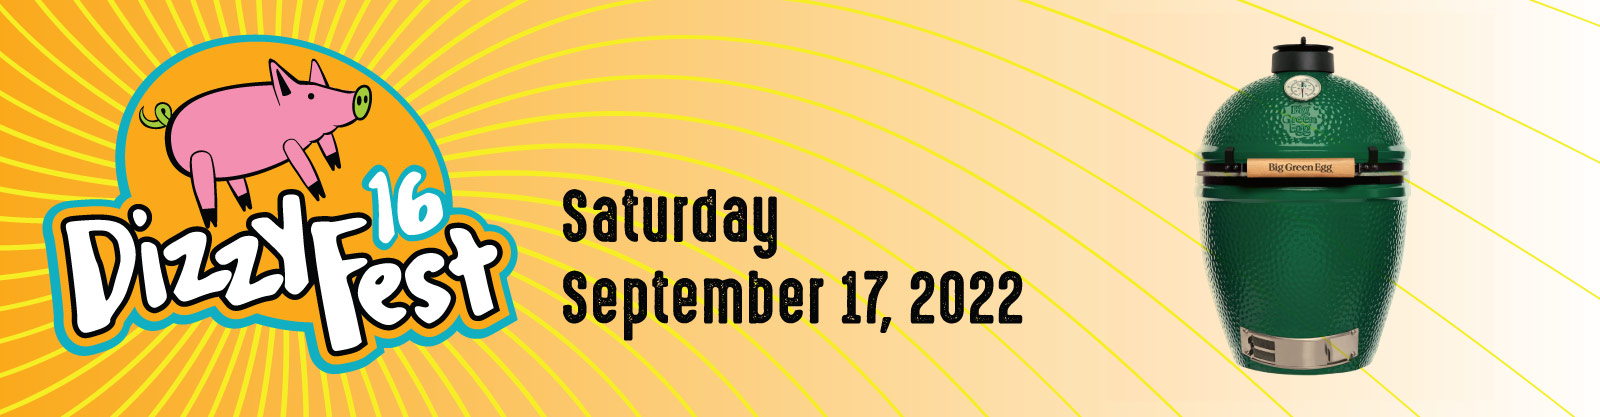 DizzyFest 16 is on September 17, 2022